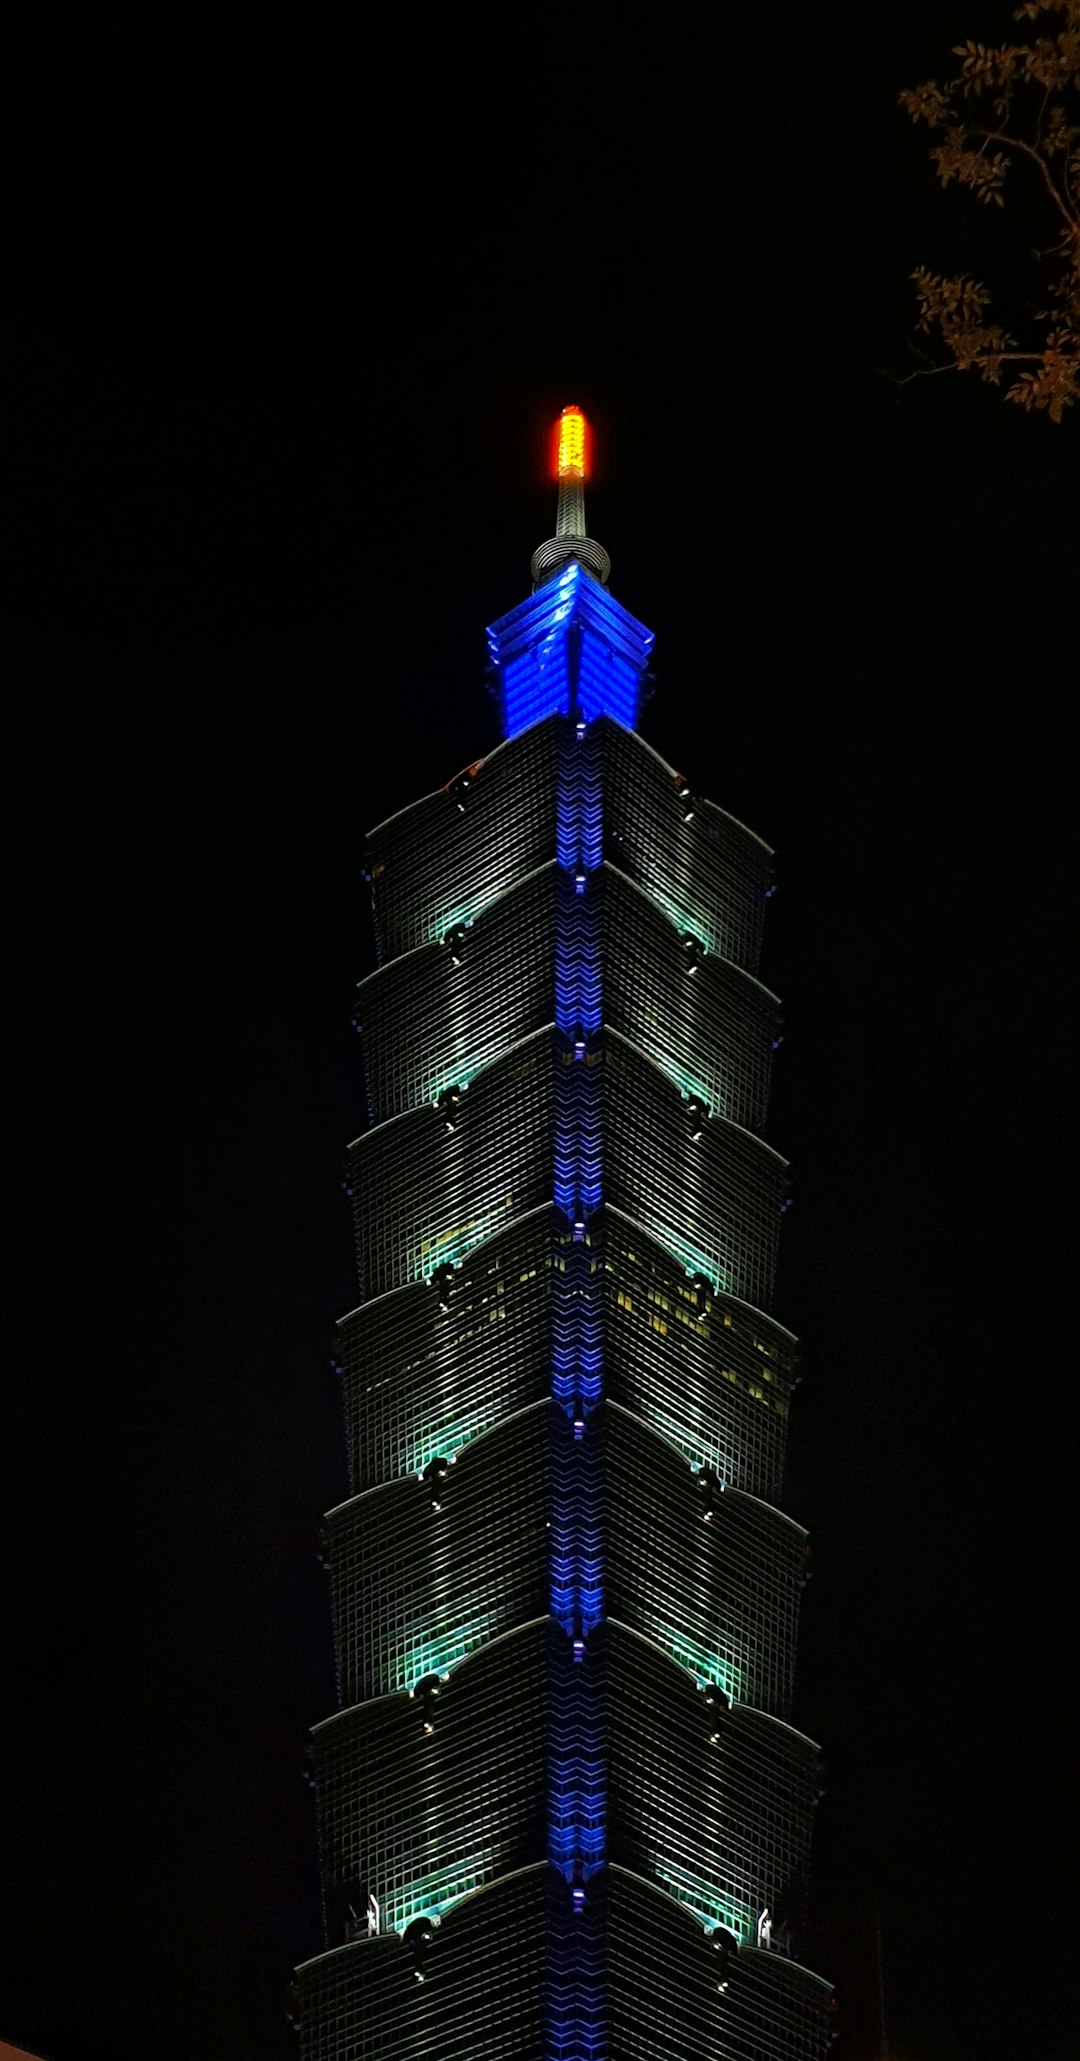 travelers stories about Landmark in Taipei 101/World Trade Center Station, Taiwan